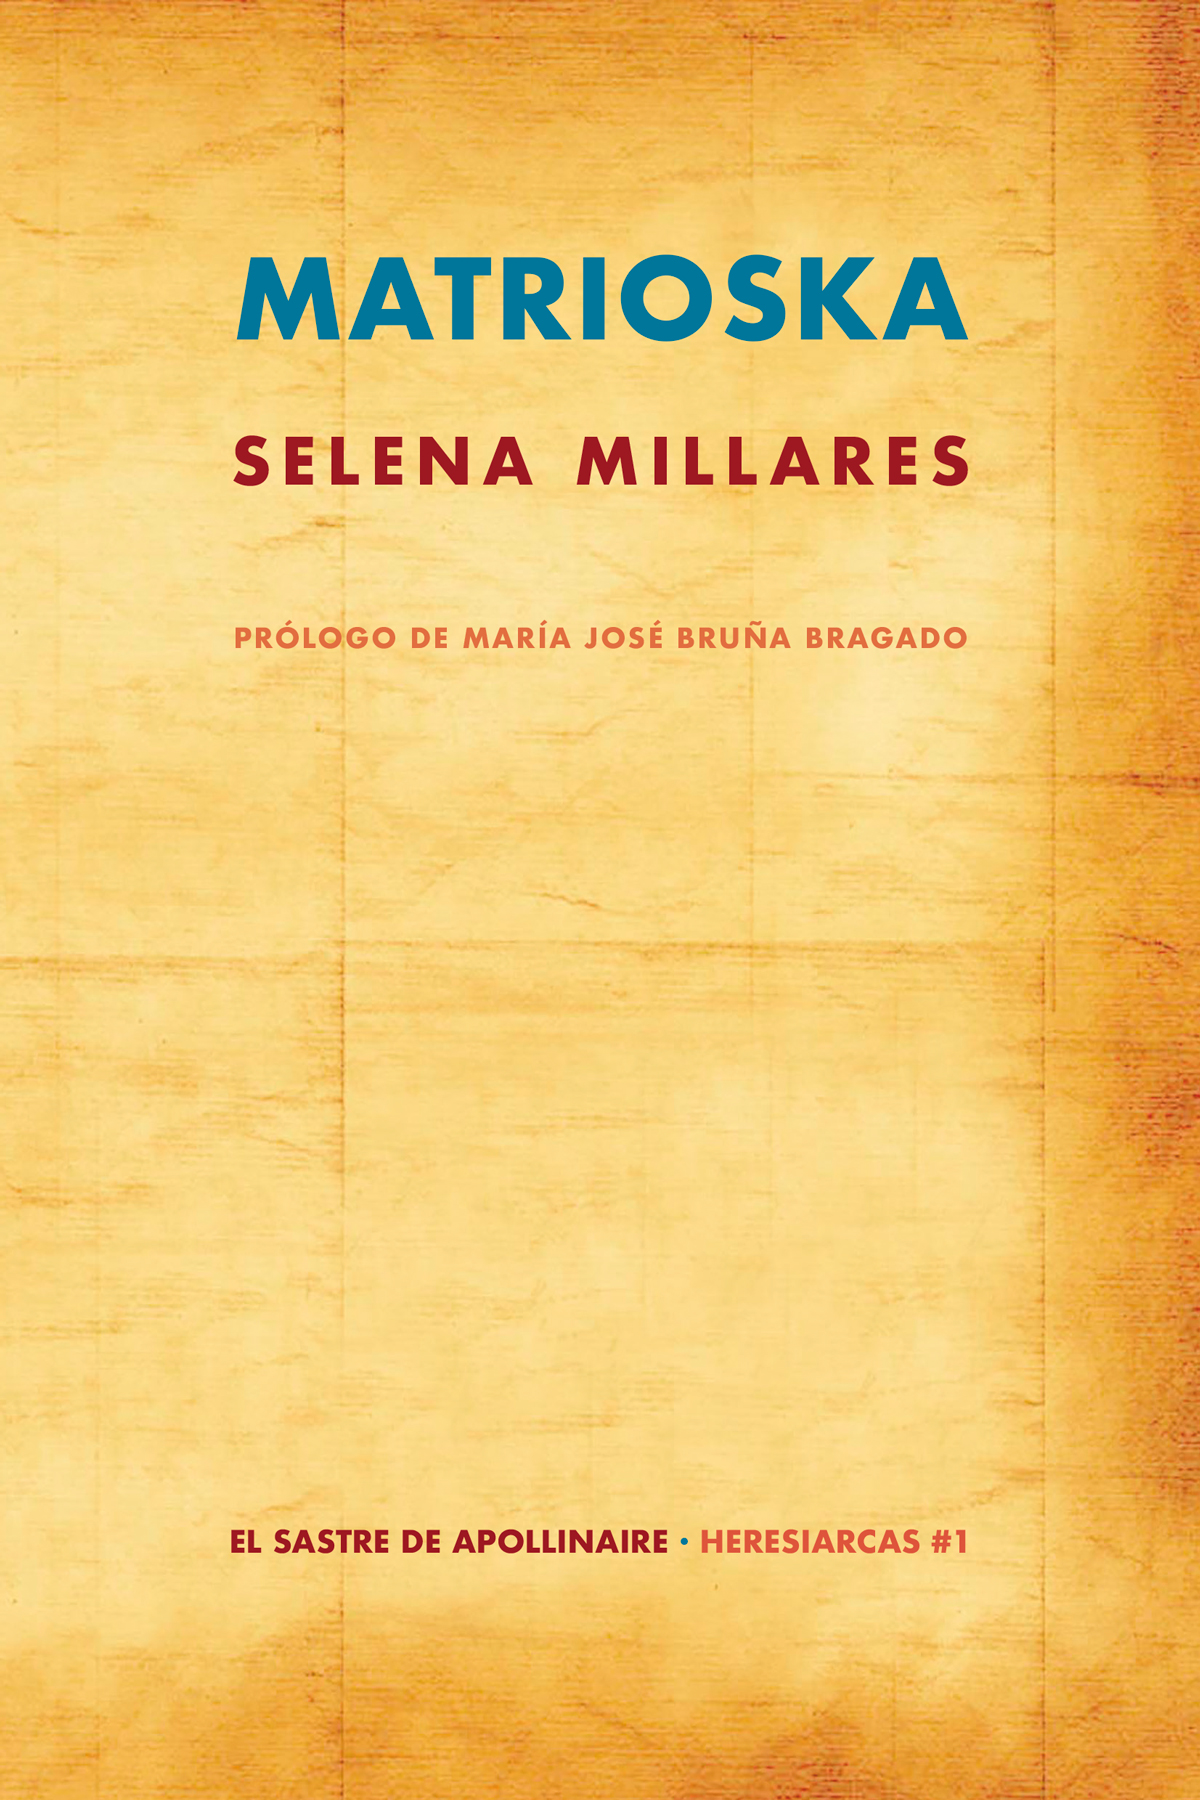 Imagen de portada del libro Matrioska